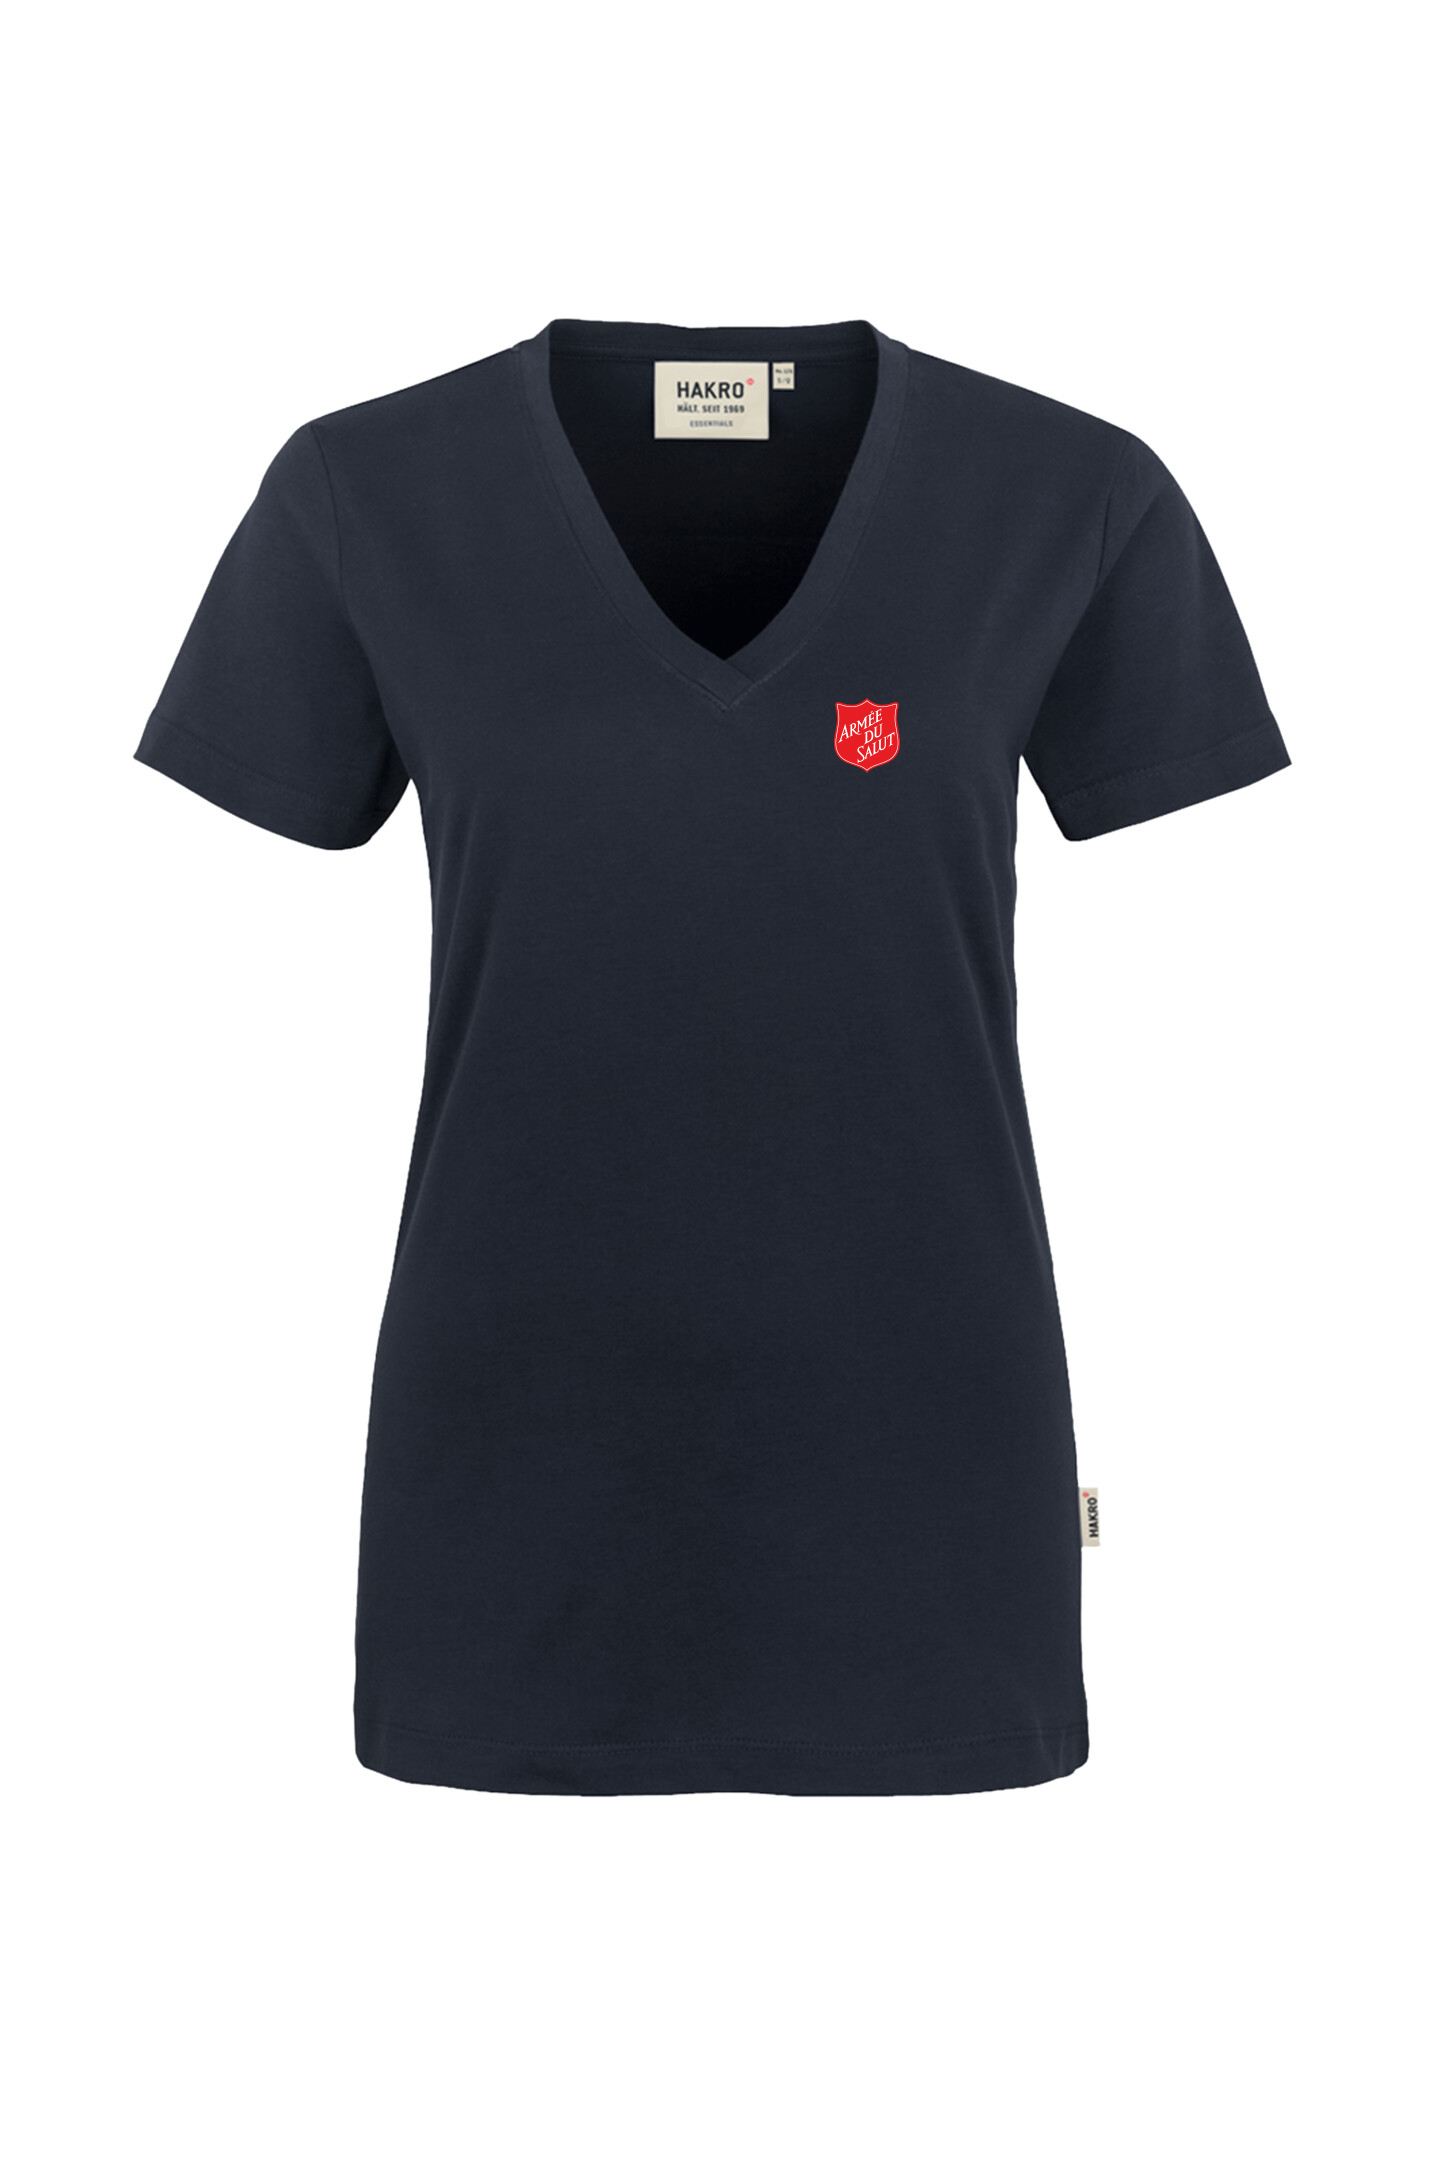 Damen V-Shirt Classic Hakro / Regular Fit